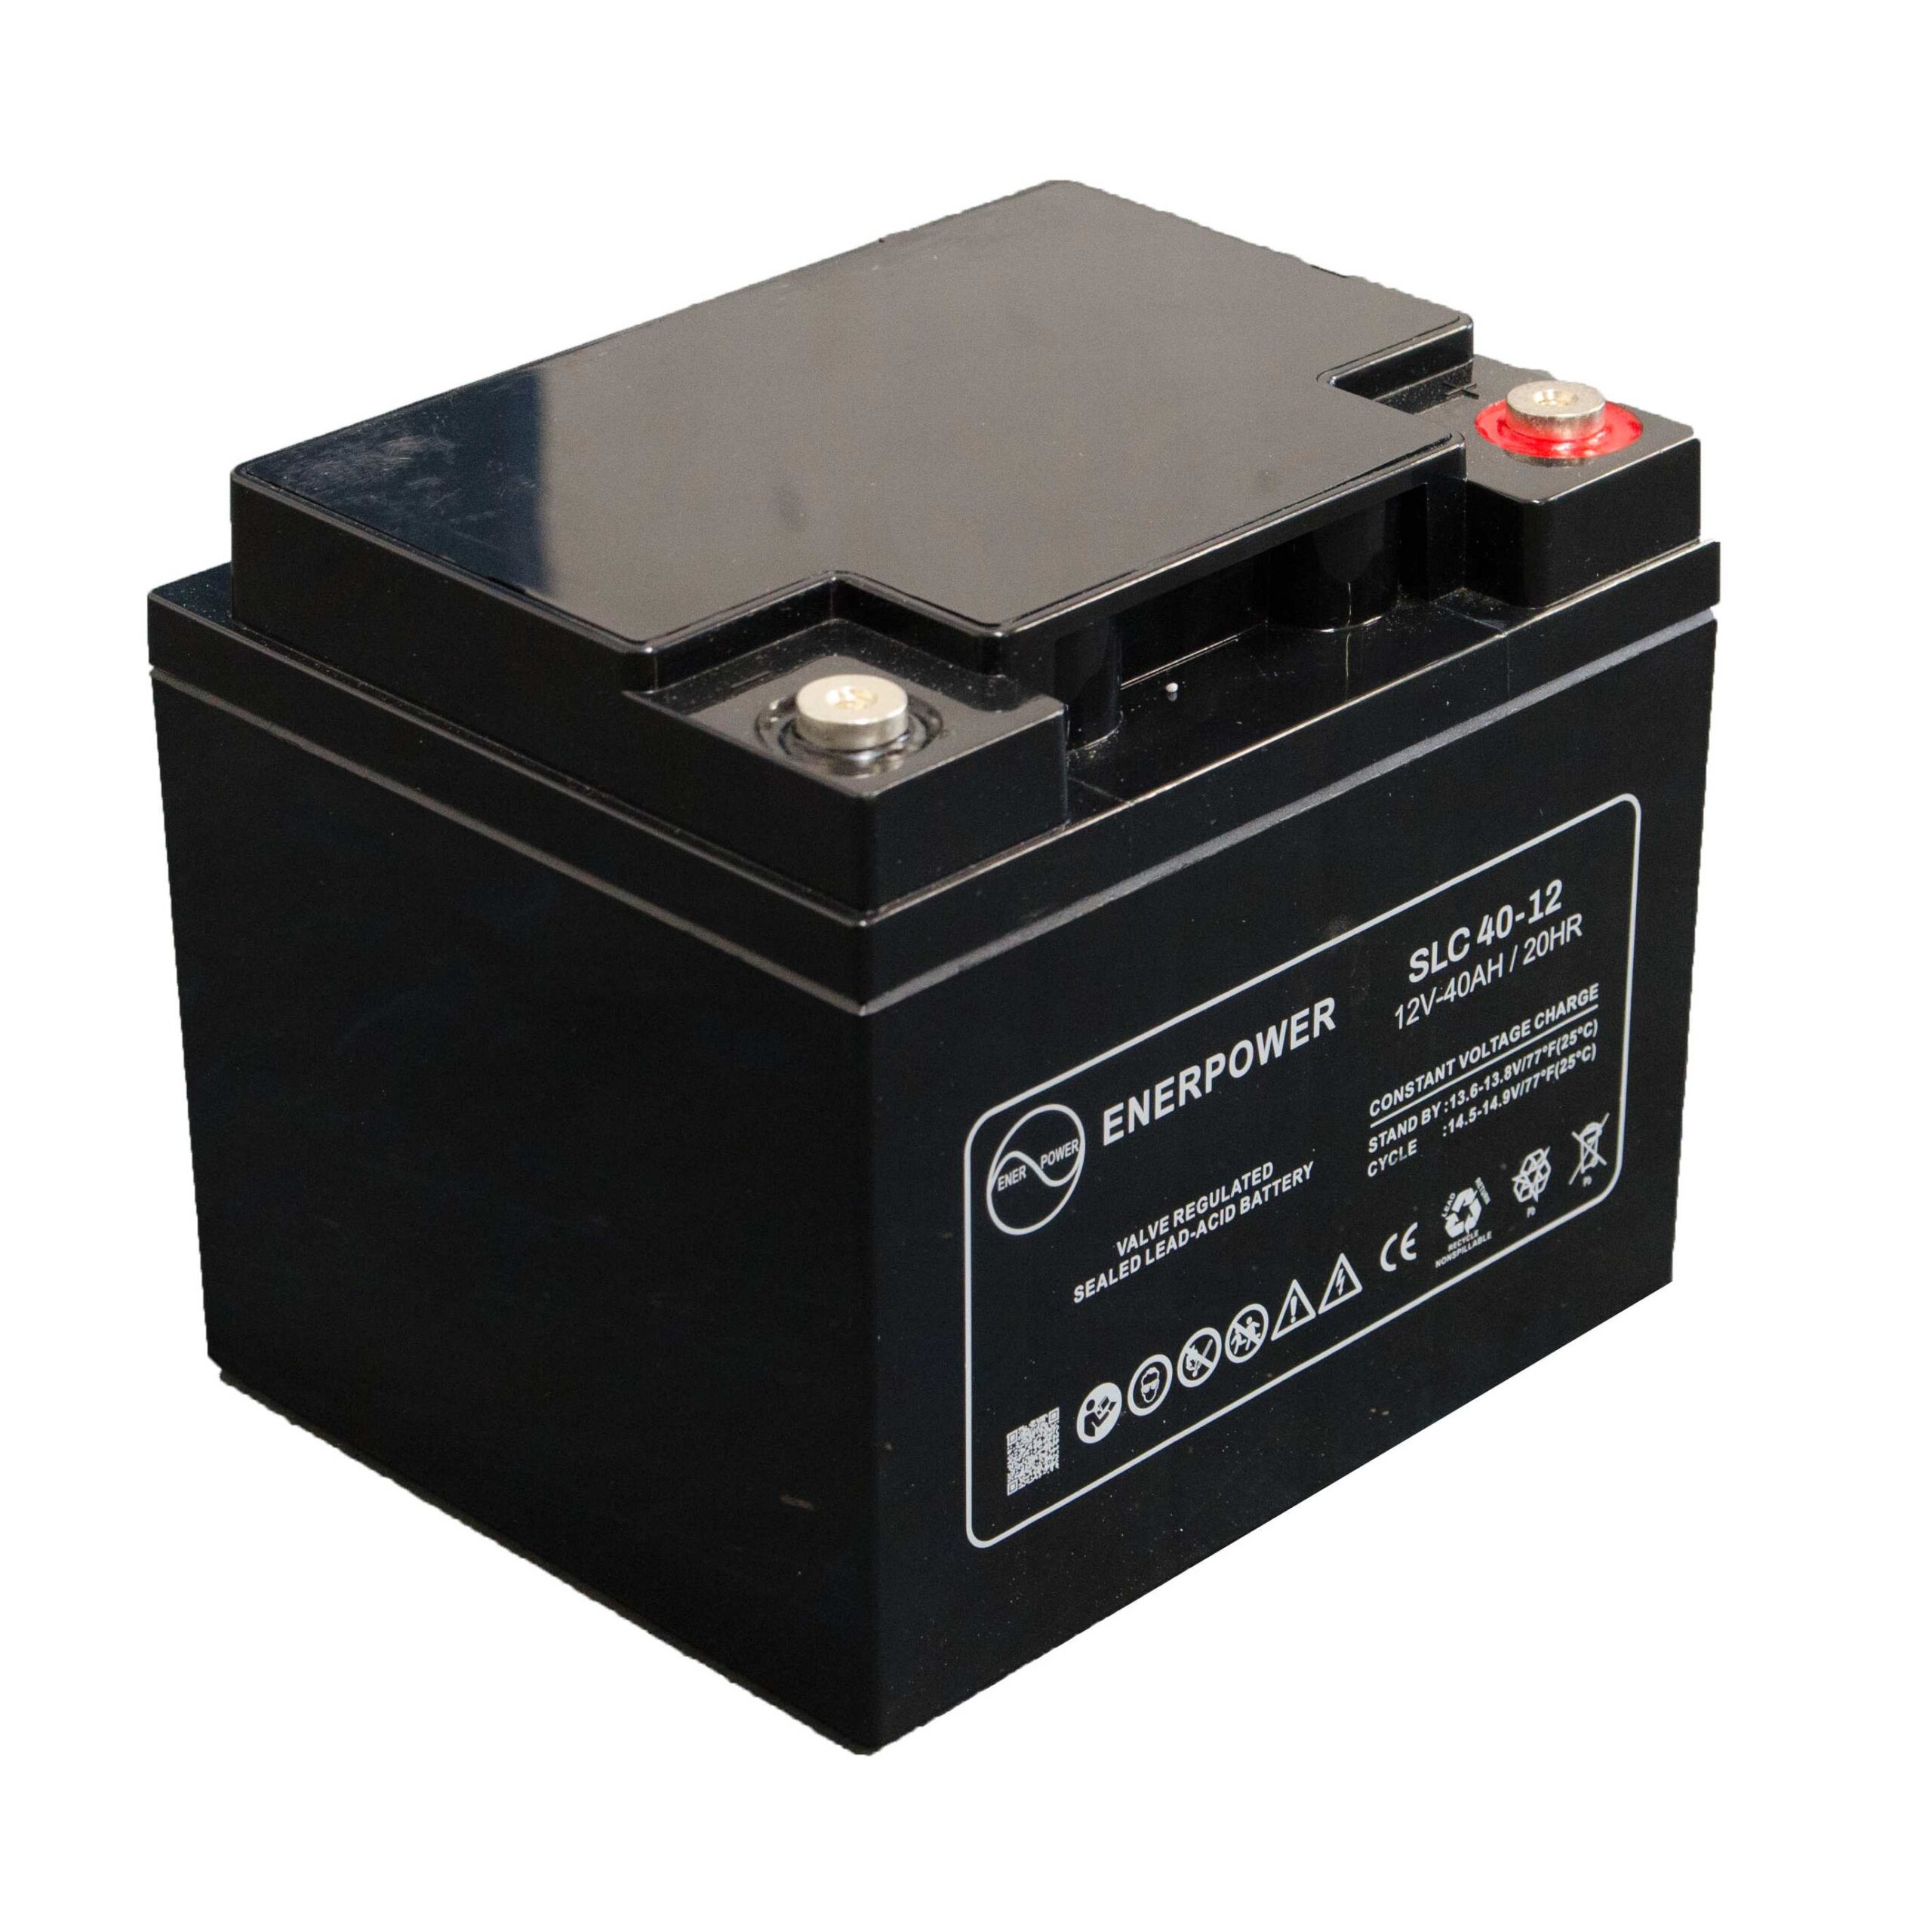 SLC 40-12 12V 40Ah AGM ENERPOWER battery